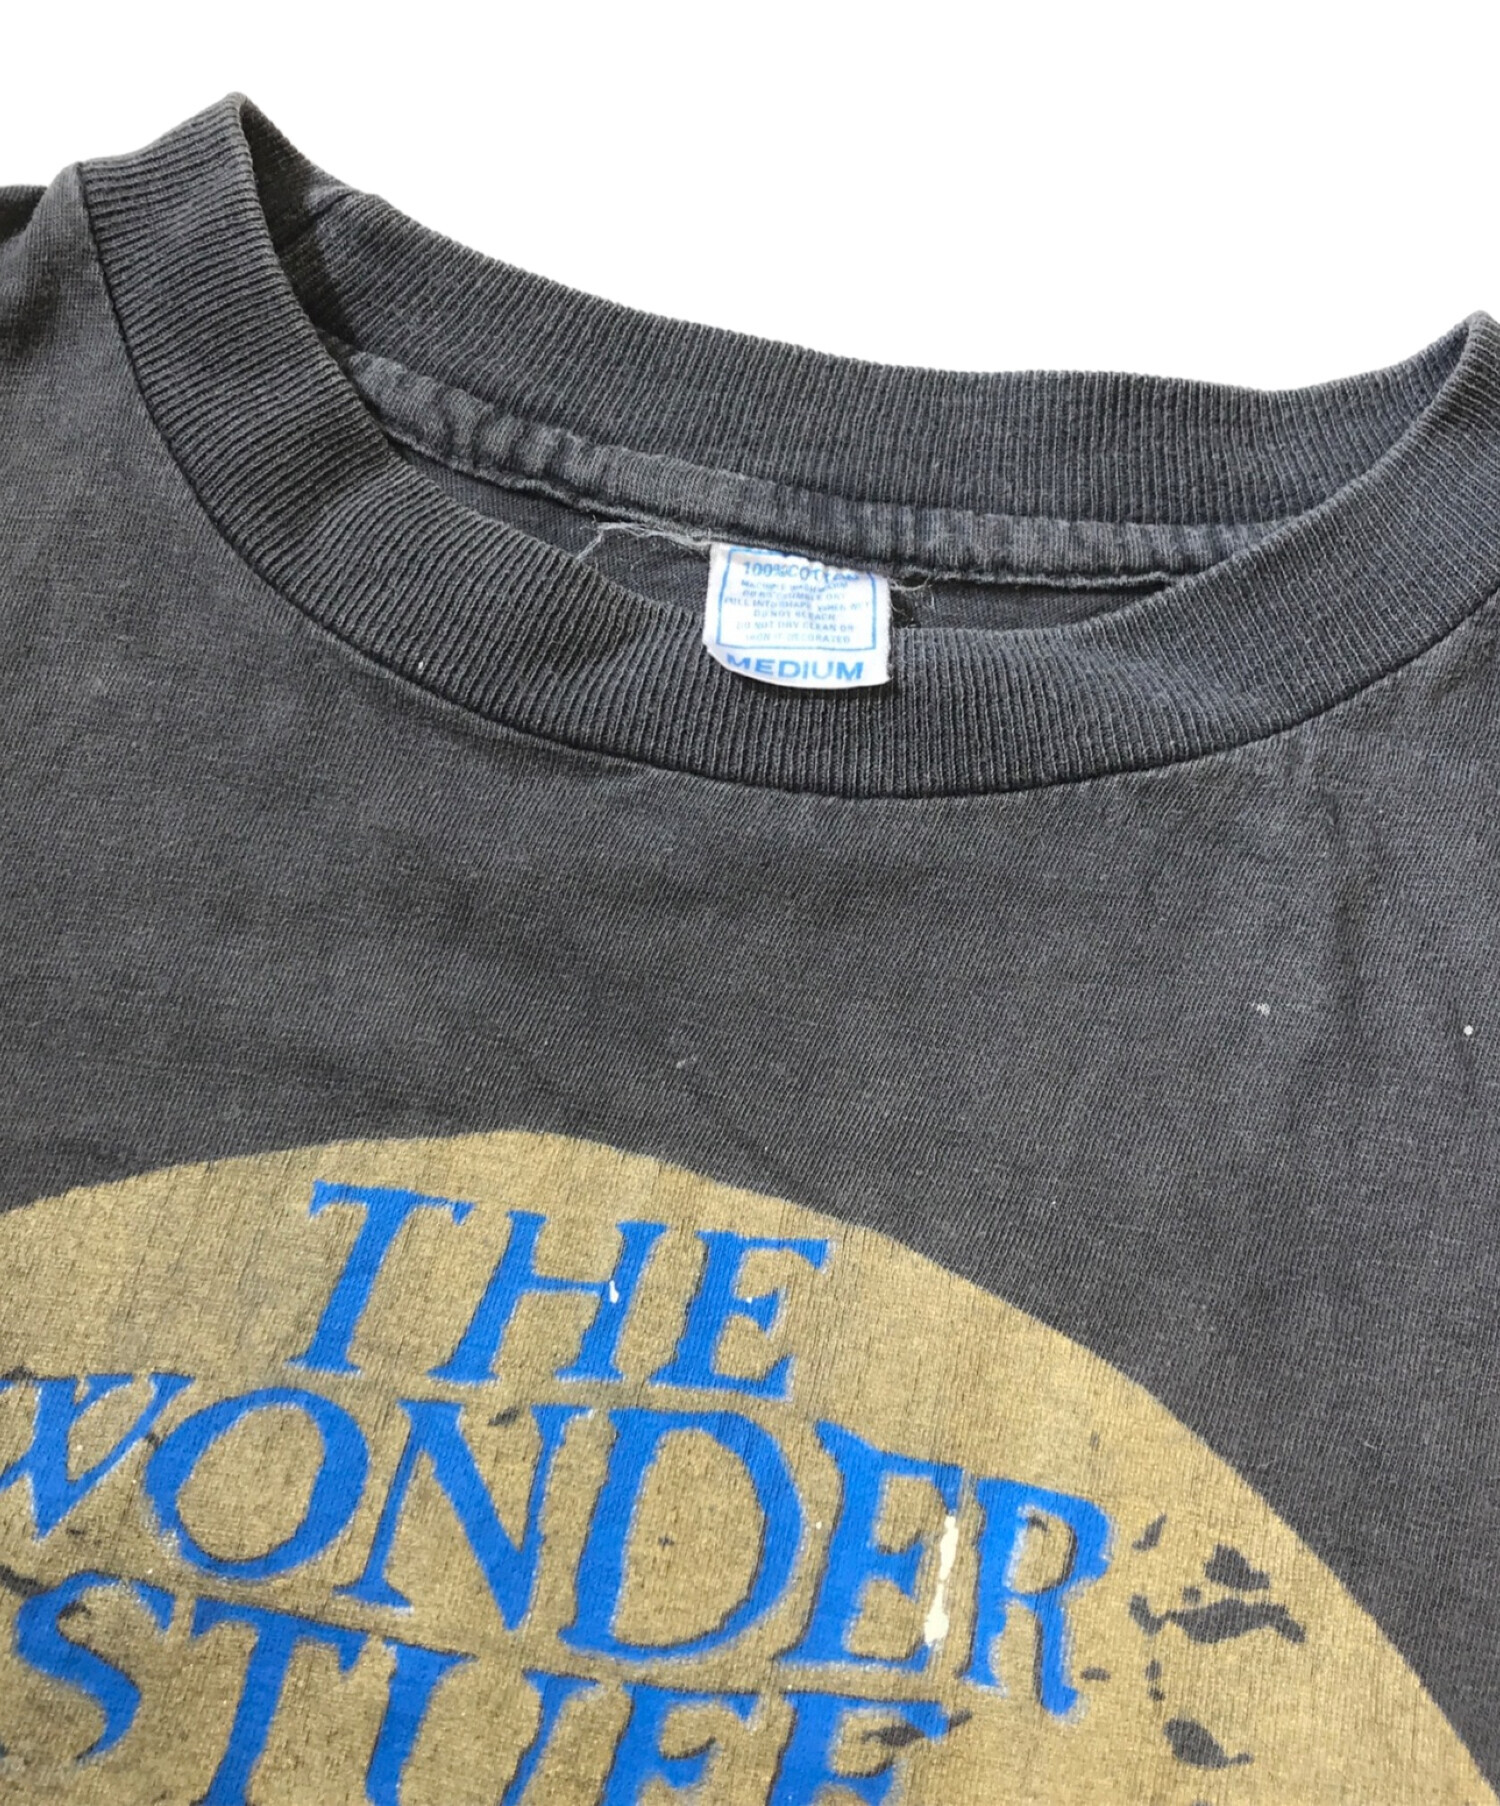 THE WONDER STUFF 91年ツアーTシャツ バンドT ビンテージ-